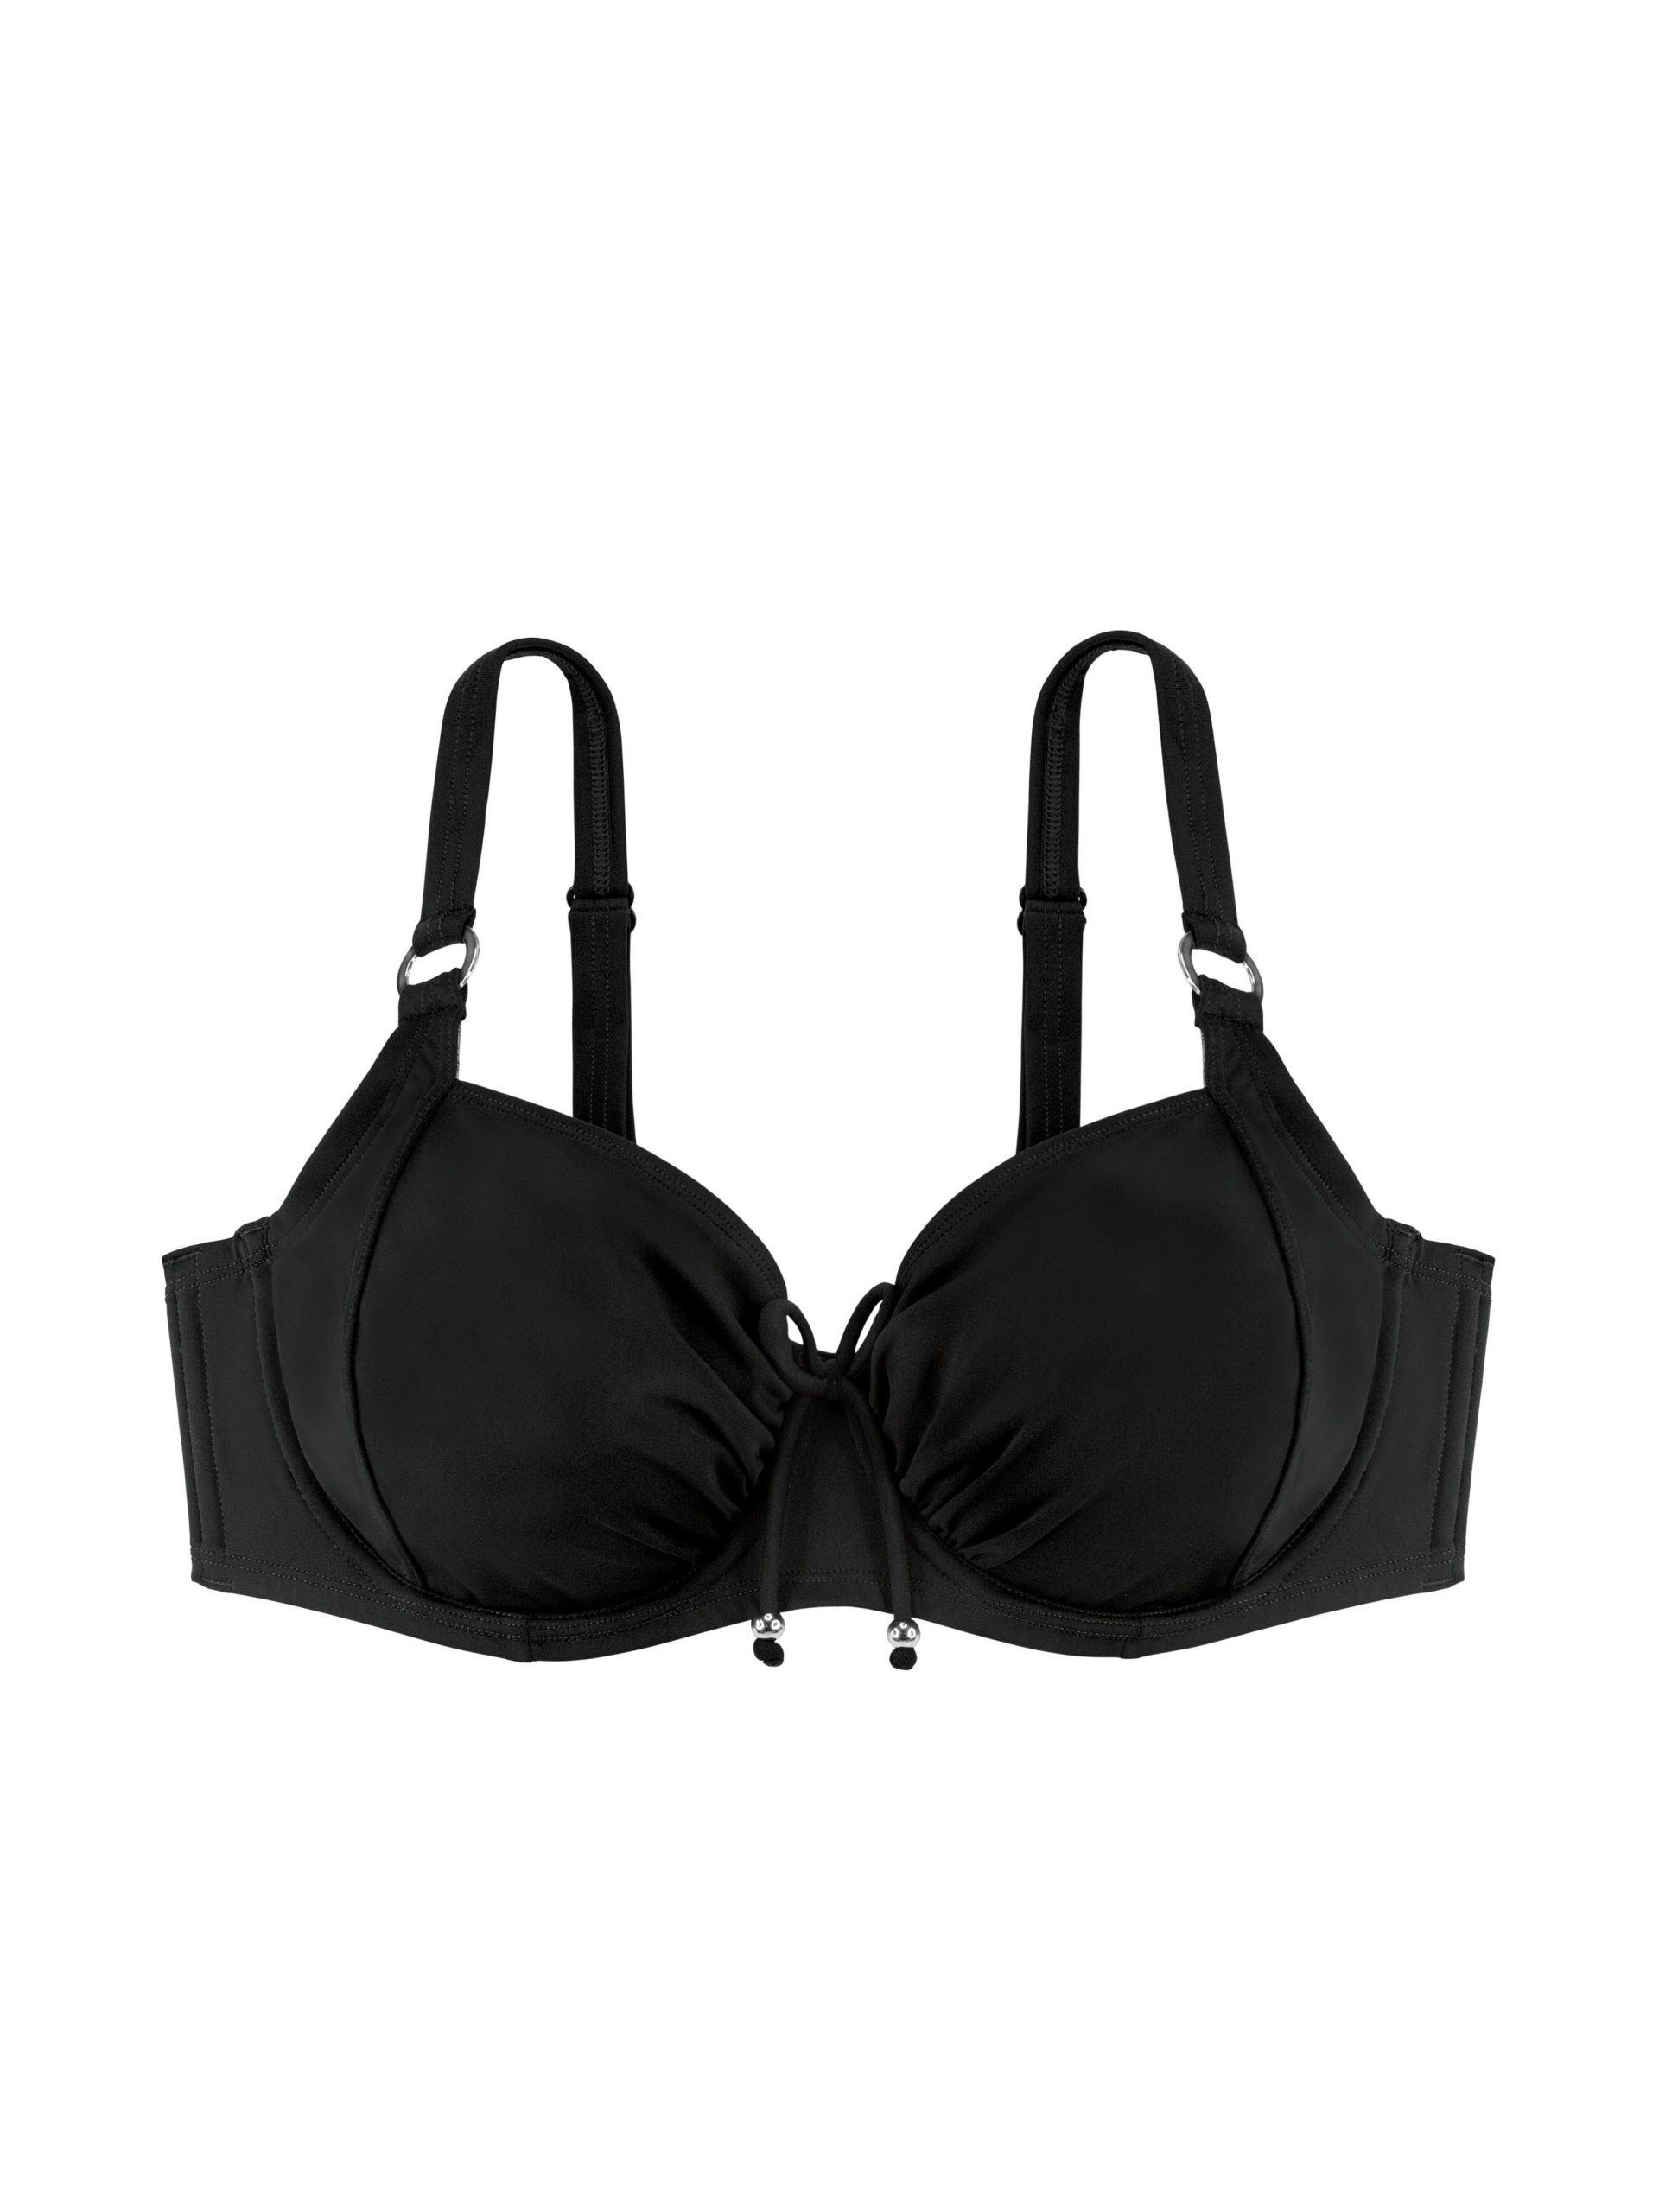 Buy Zivame Ultra Soft Low Rise Bikini Brief - Black at Rs.285